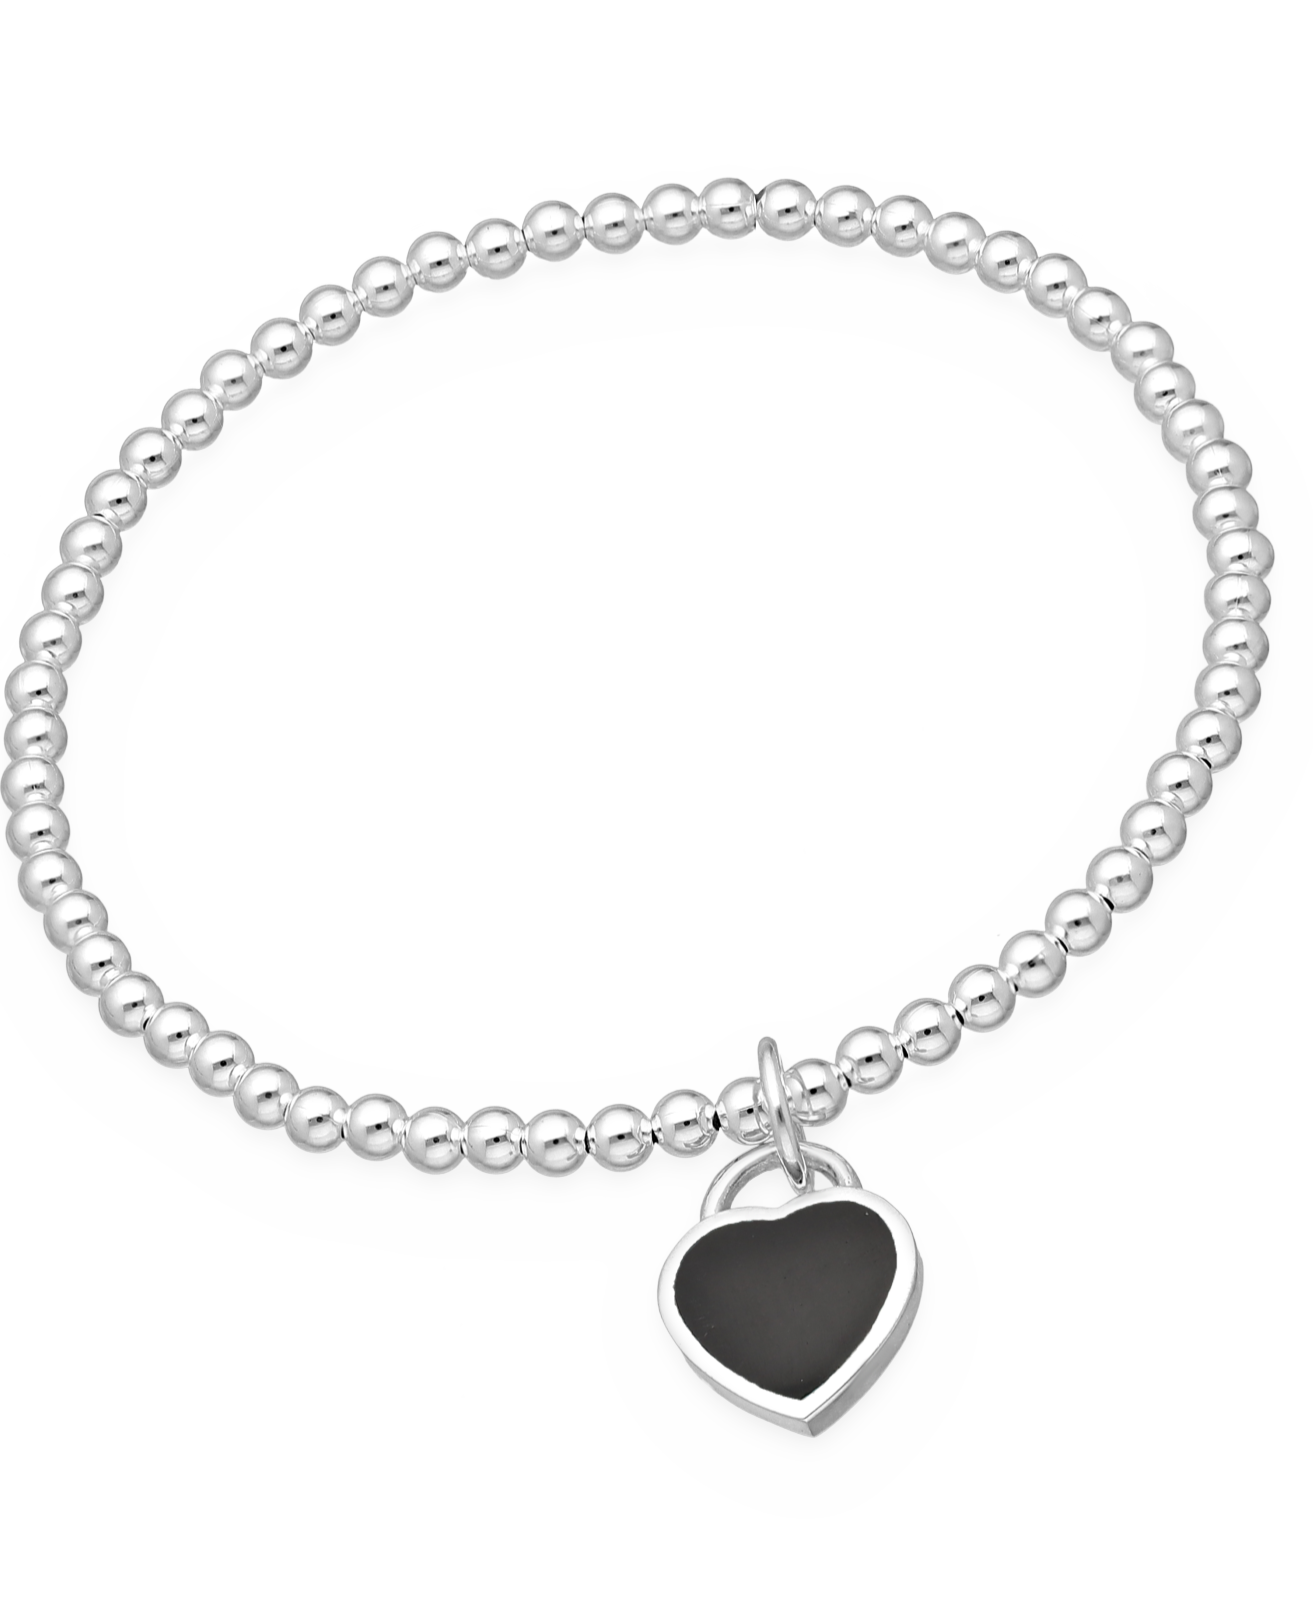 Sterling Silver Elastic Ball Bracelet with Black Resin Heart